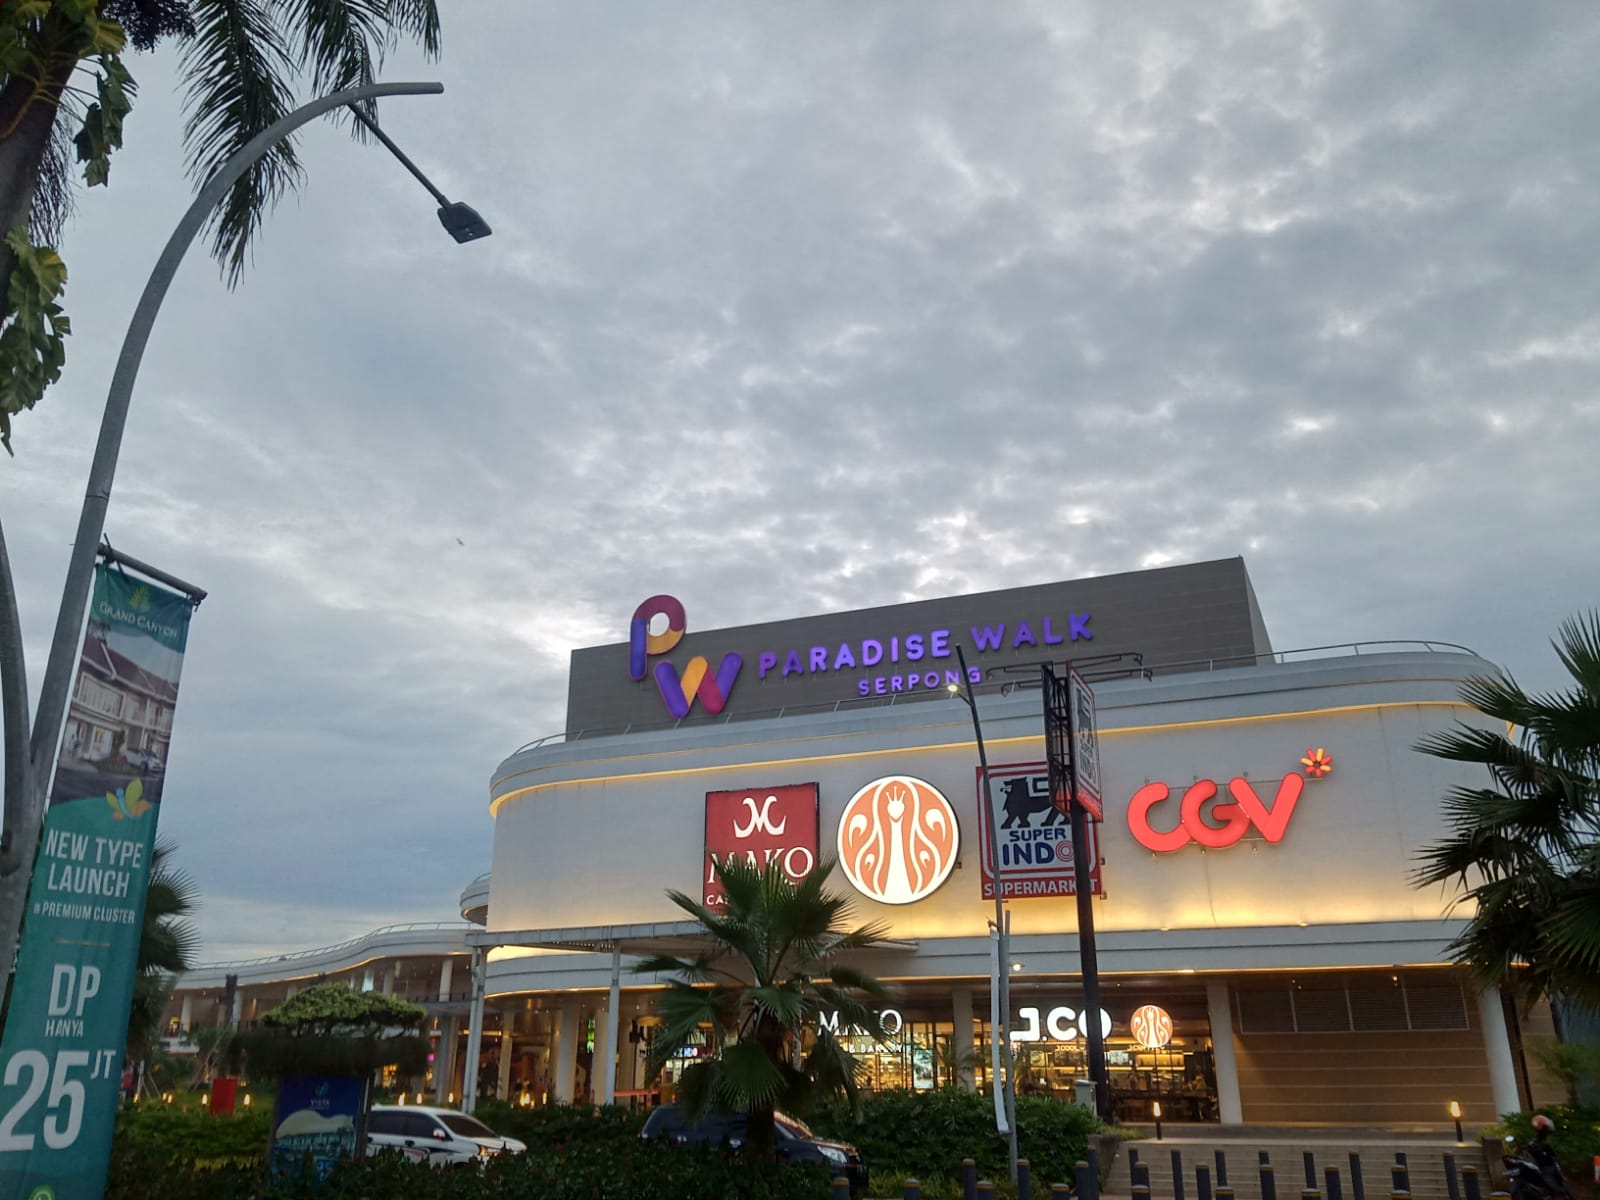 CGV Paradise Walk Serpong, Bioskop Baru di Tangerang Selatan